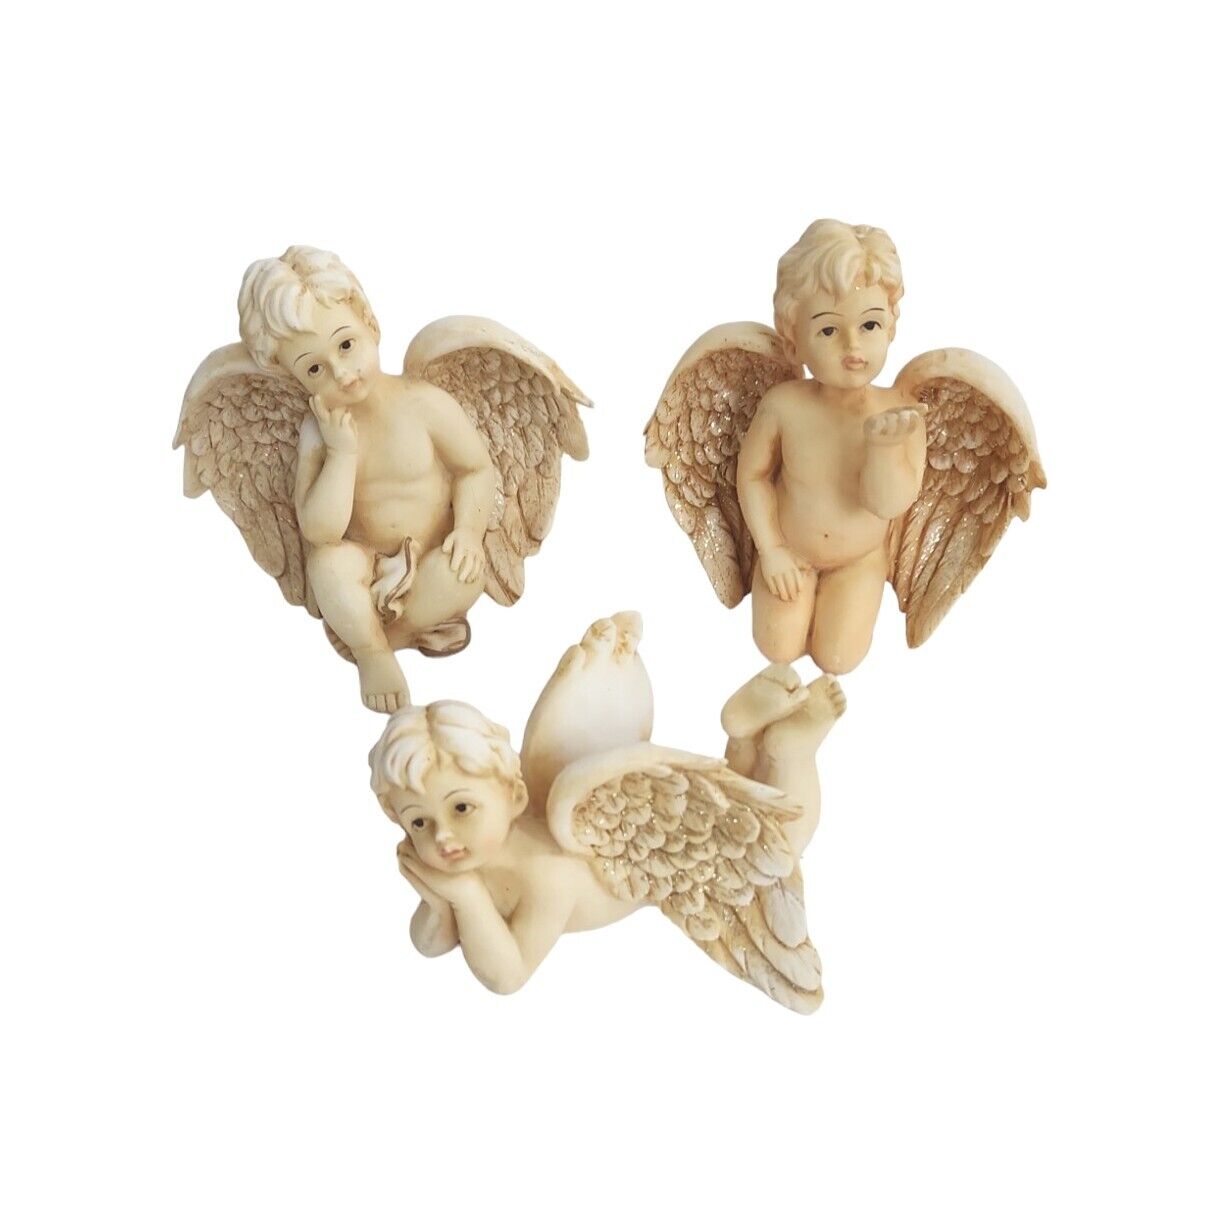 Vintage Resin Cherub Angel Figurine Set Of 3 Shelf Sitter Table Top Mantle Decor